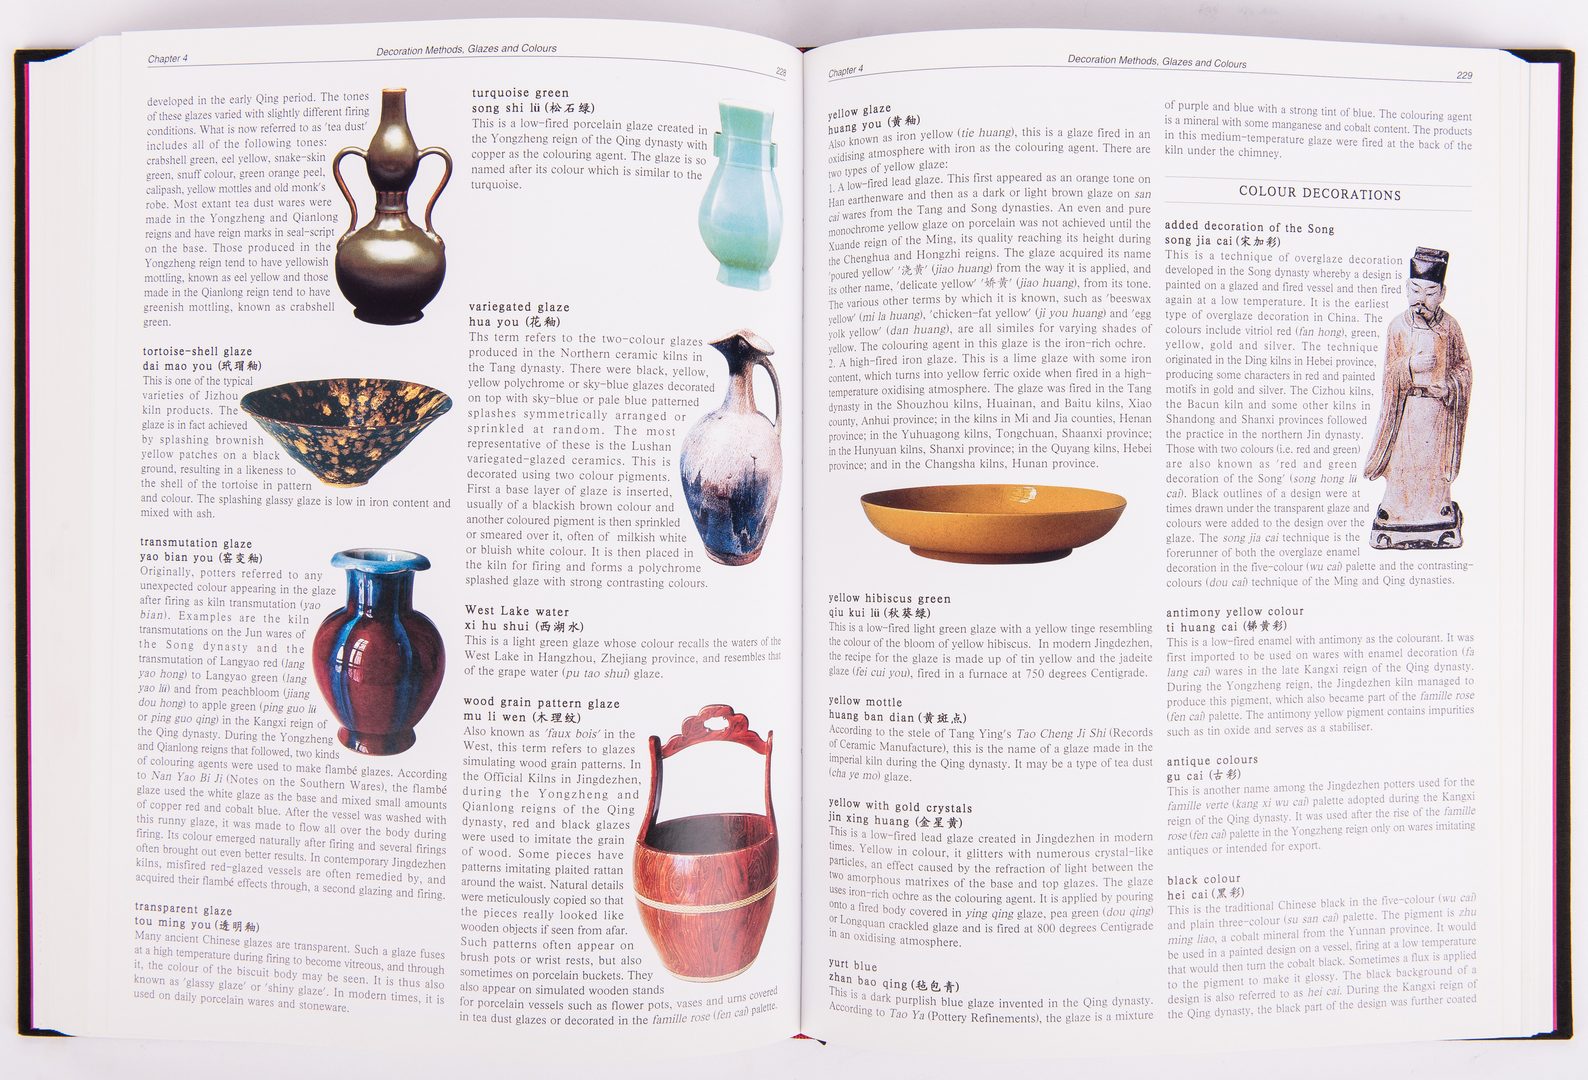 Lot 390: Wang Qing Zheng, Dictionary of Chinese Ceramics